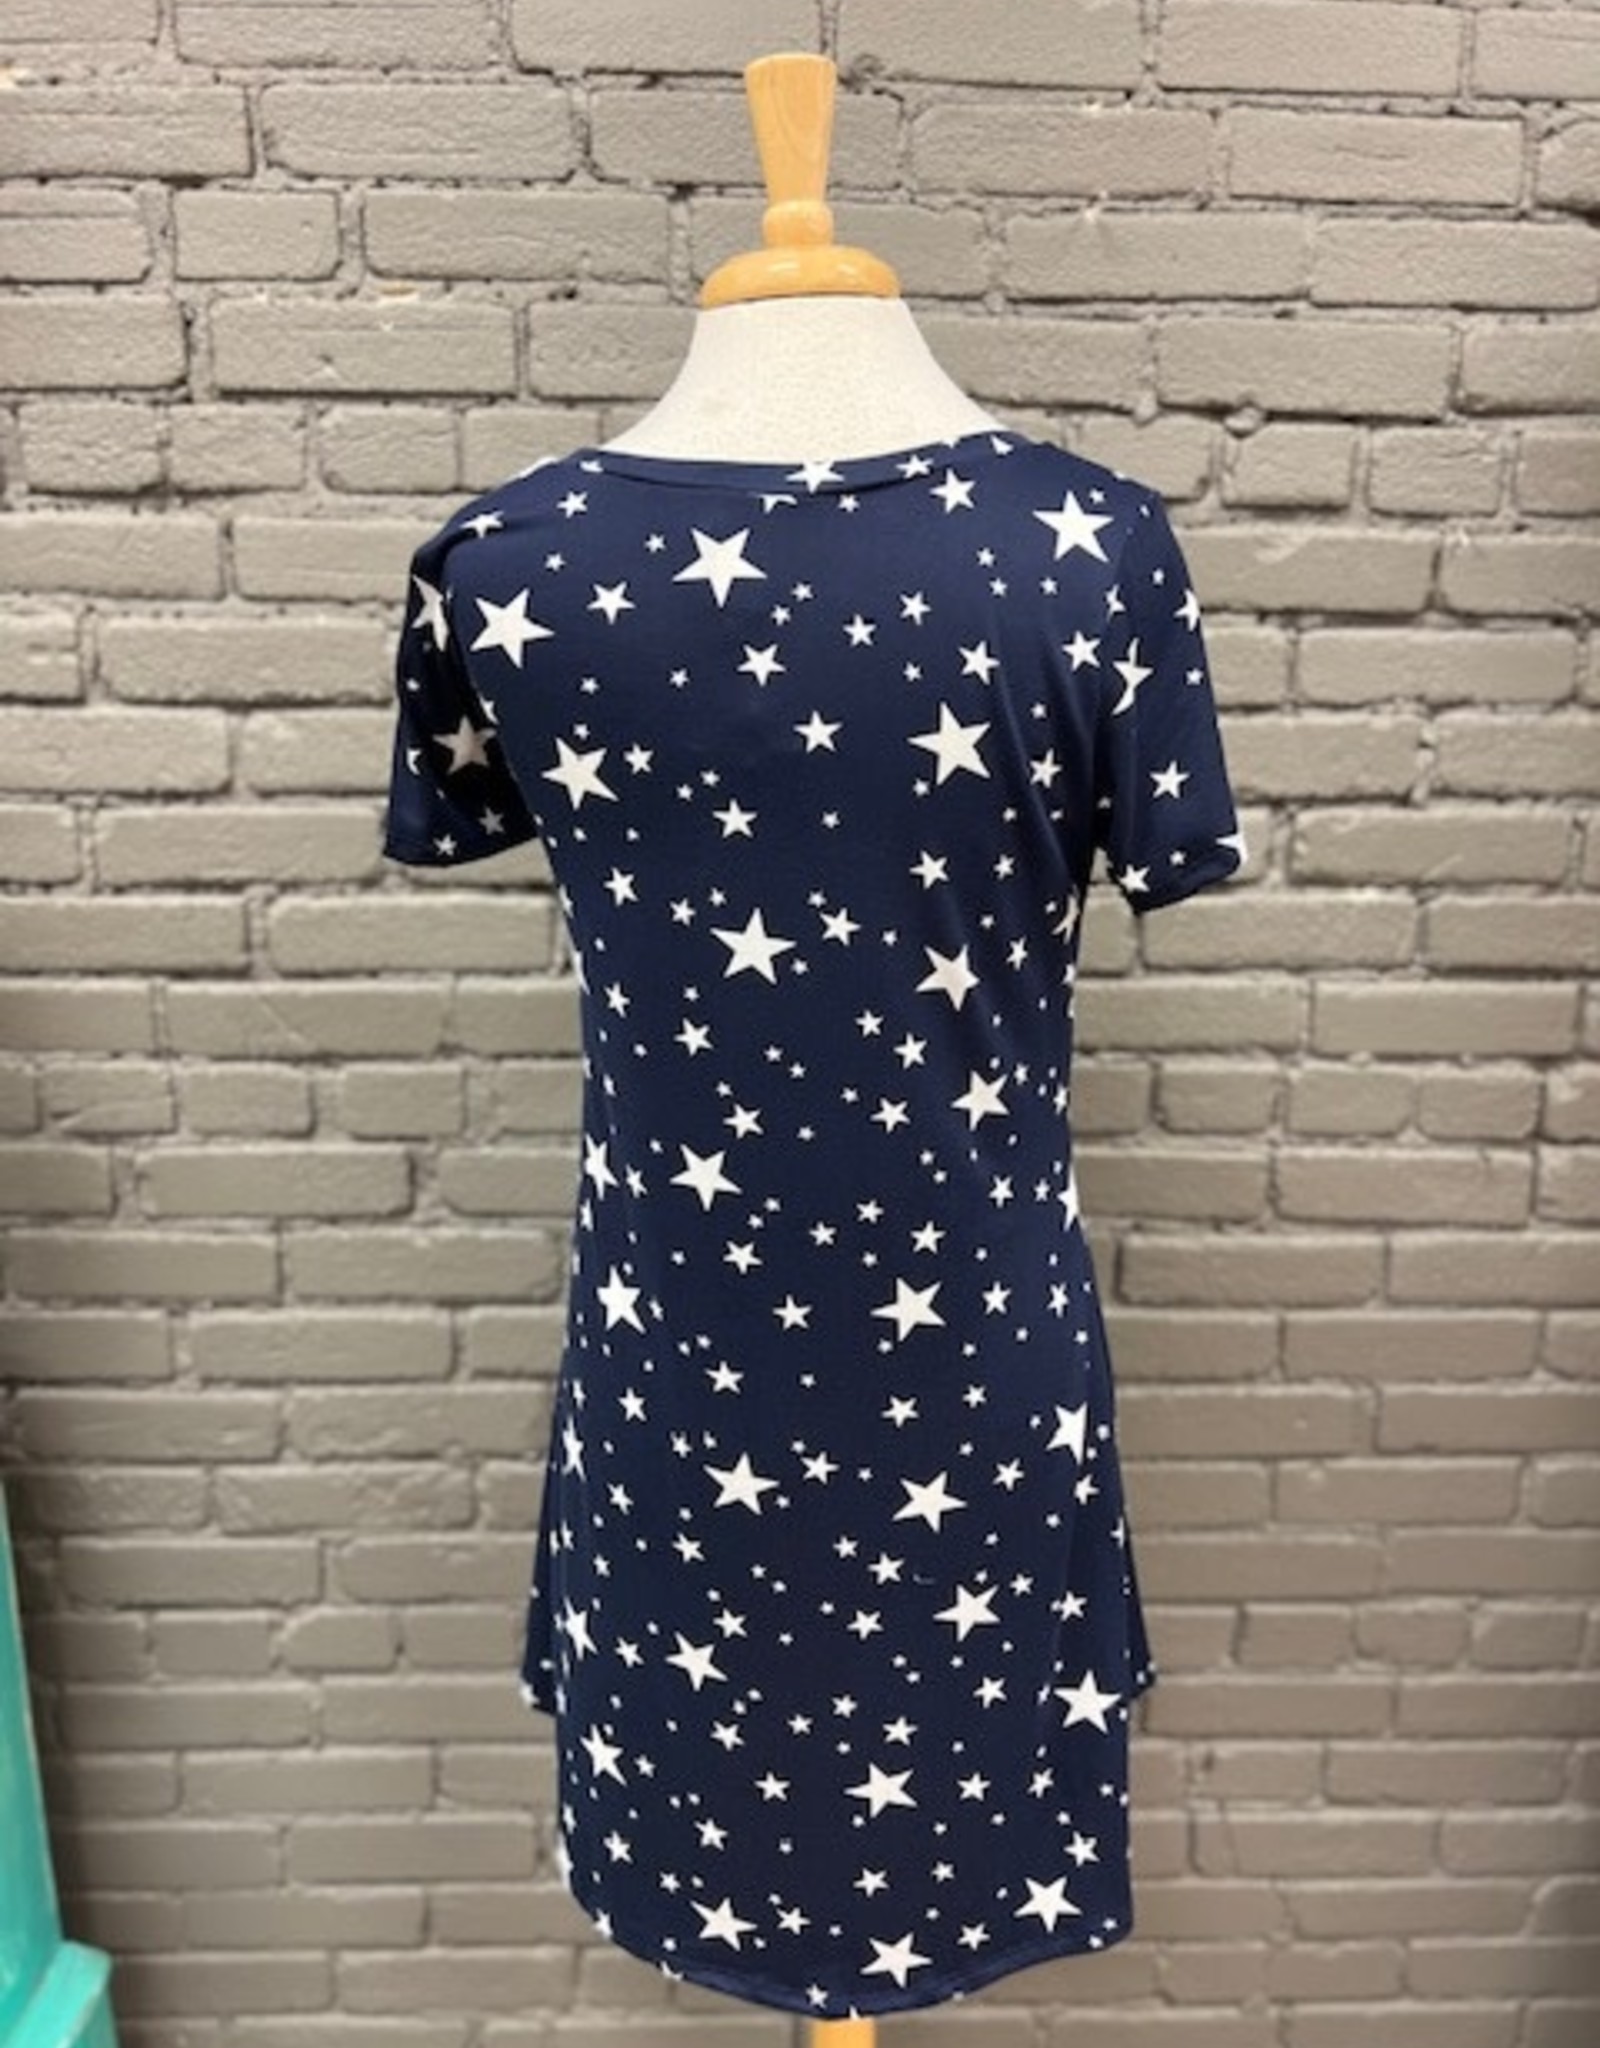 Dress Sally Star Print Dress